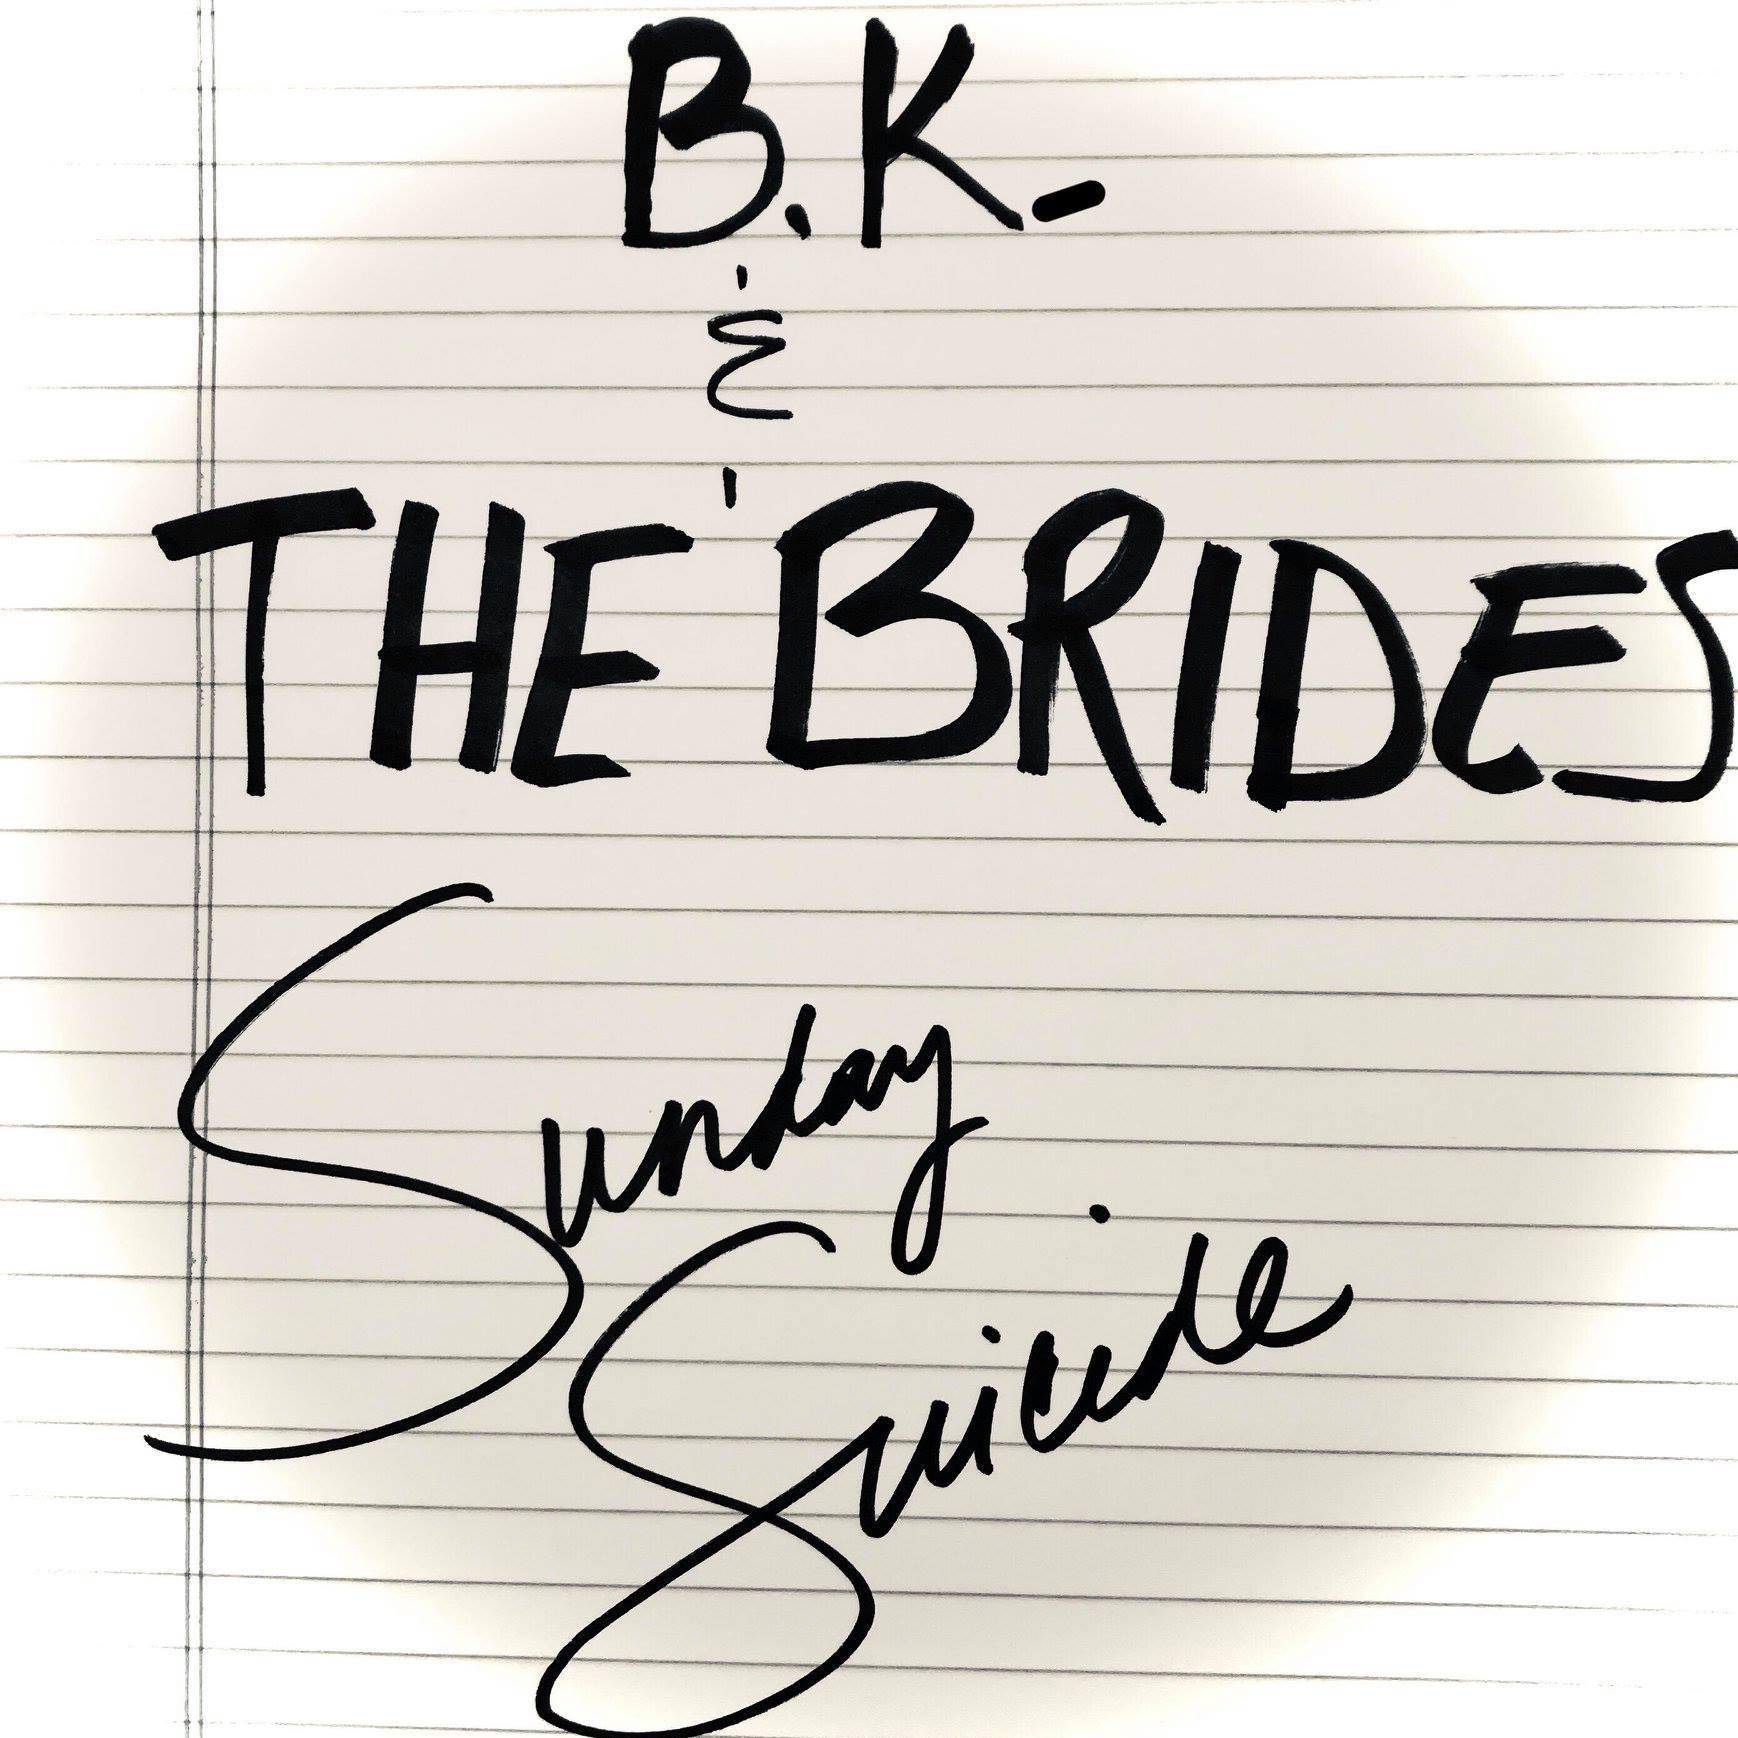 Billy Kernkamp and the Brides